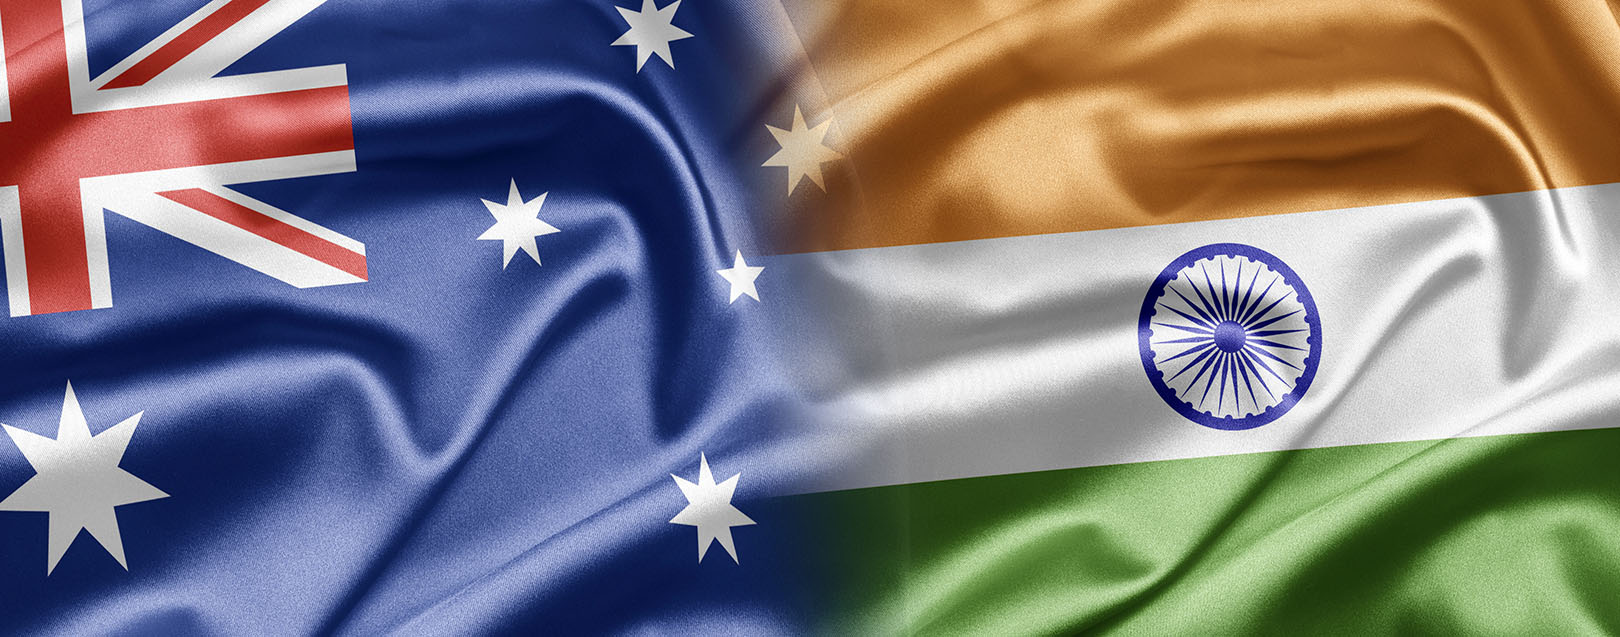 India, land of immense opportunity for Australia: Malcolm Turnbull